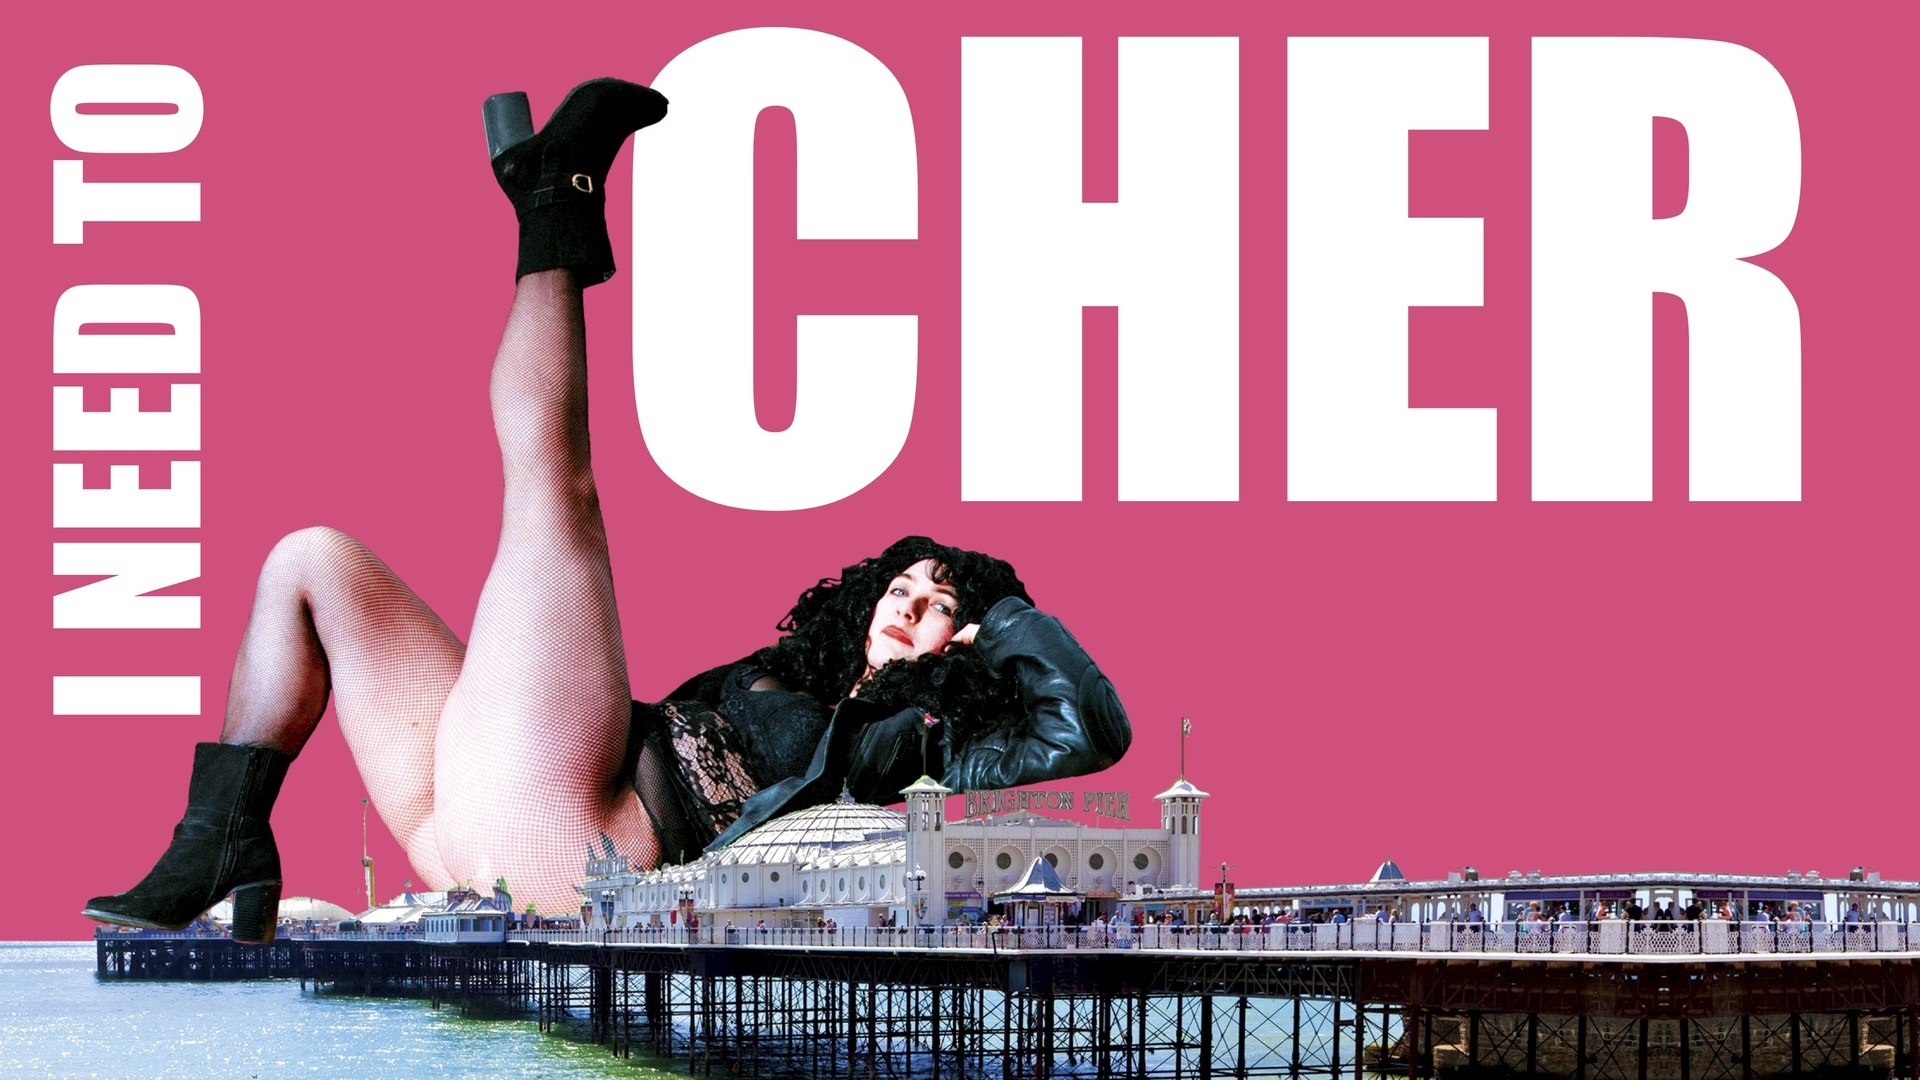 I Need to CHER - Cabaret, Brighton, England, United Kingdom